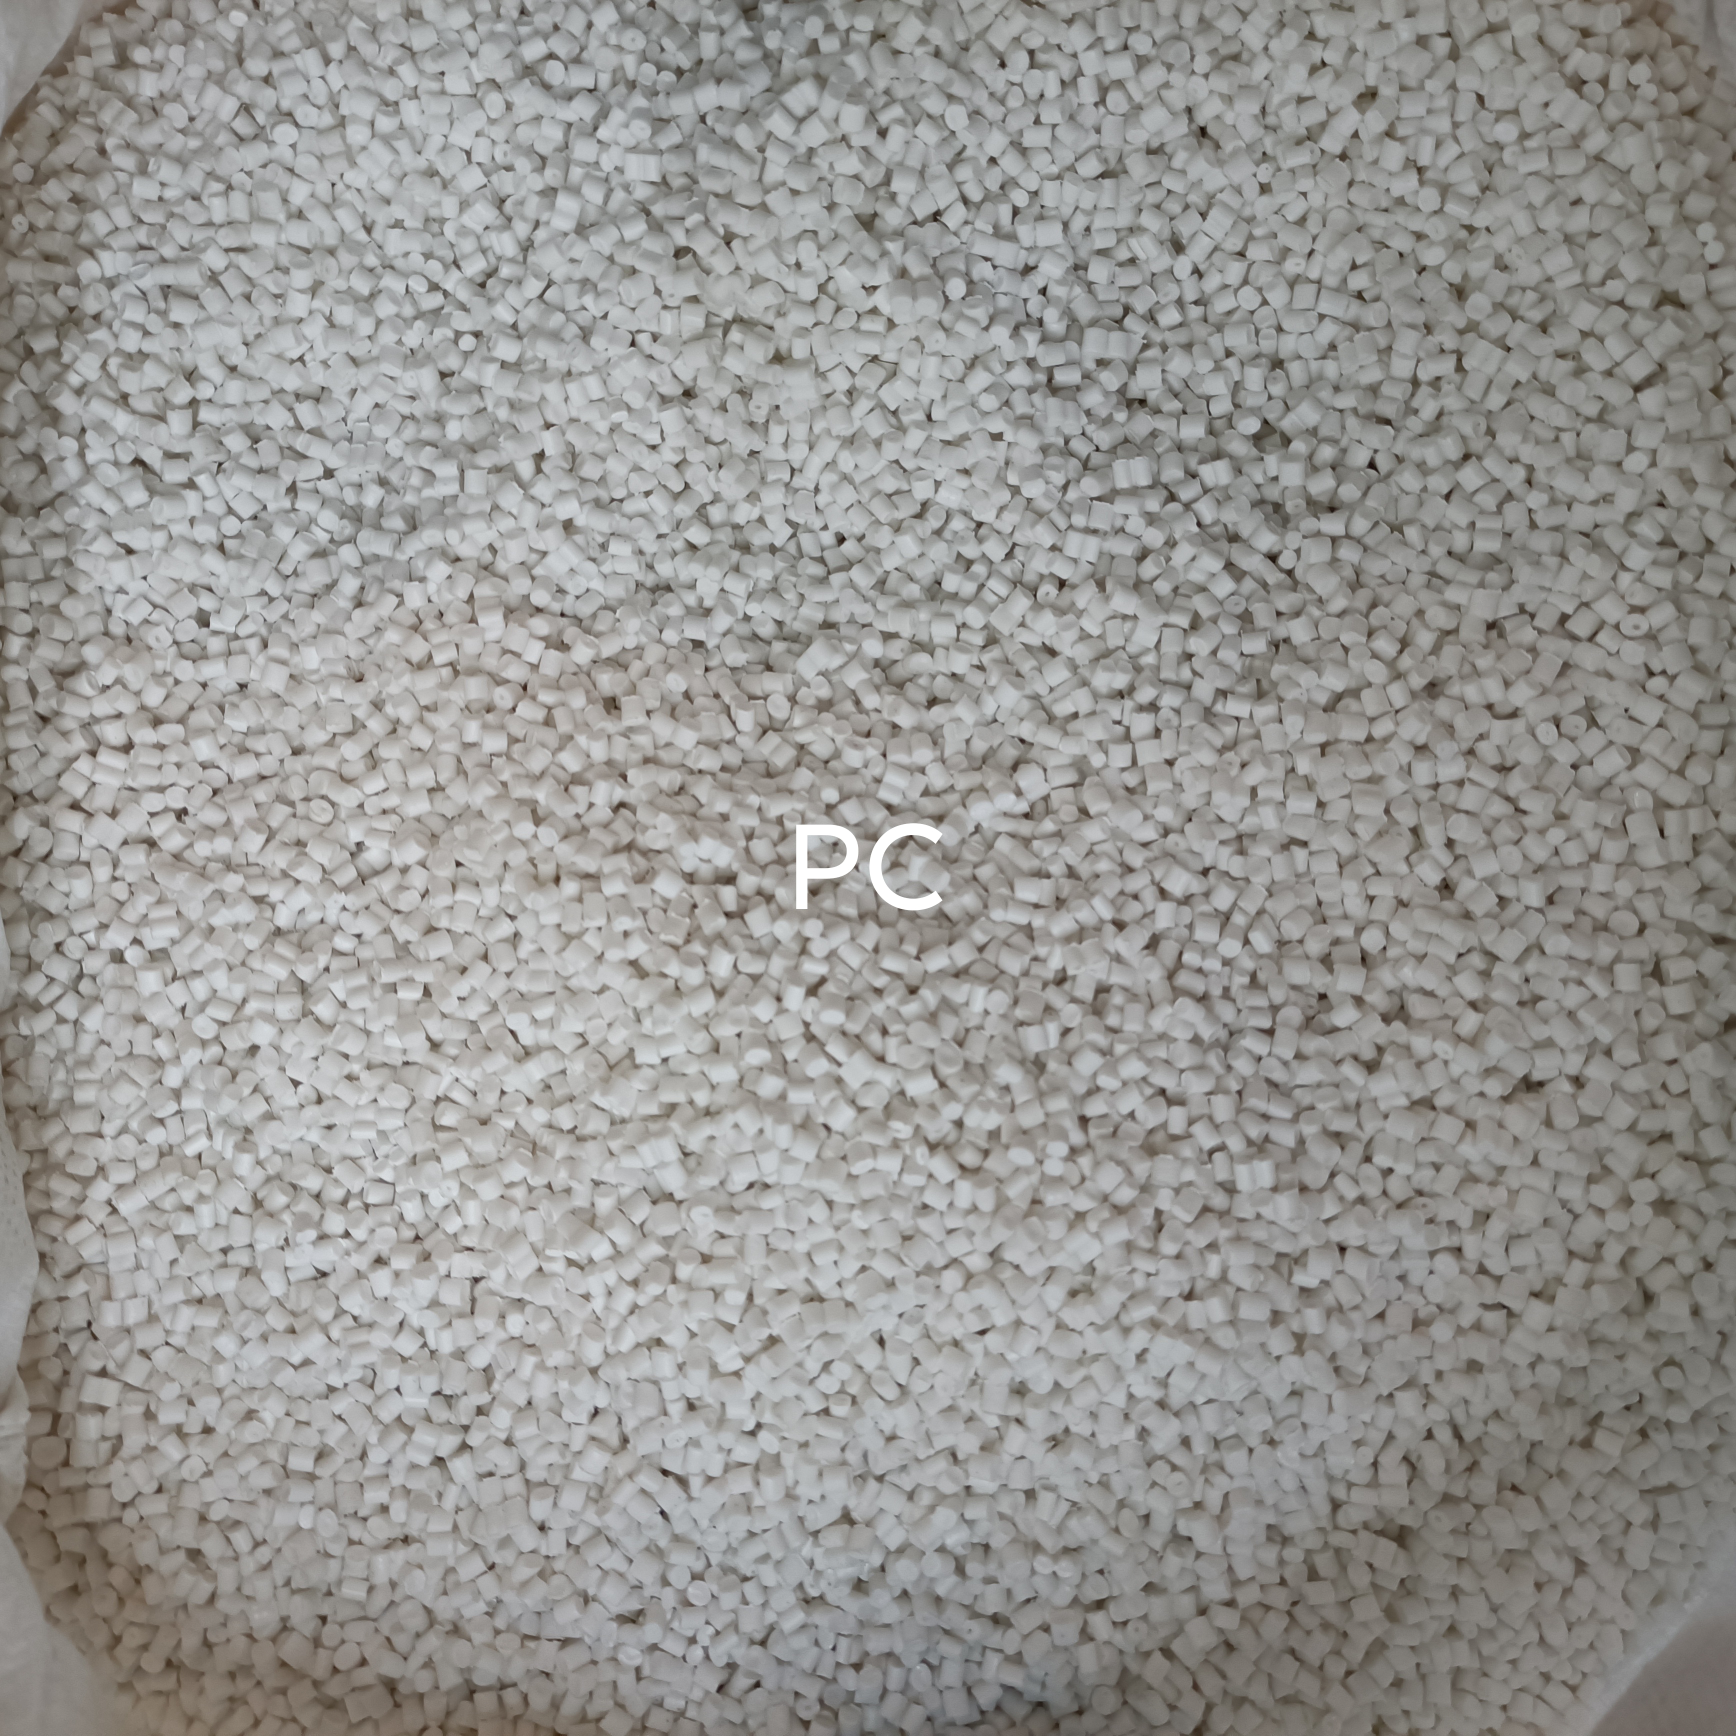 PC白色回料塑料粒子价格面议图